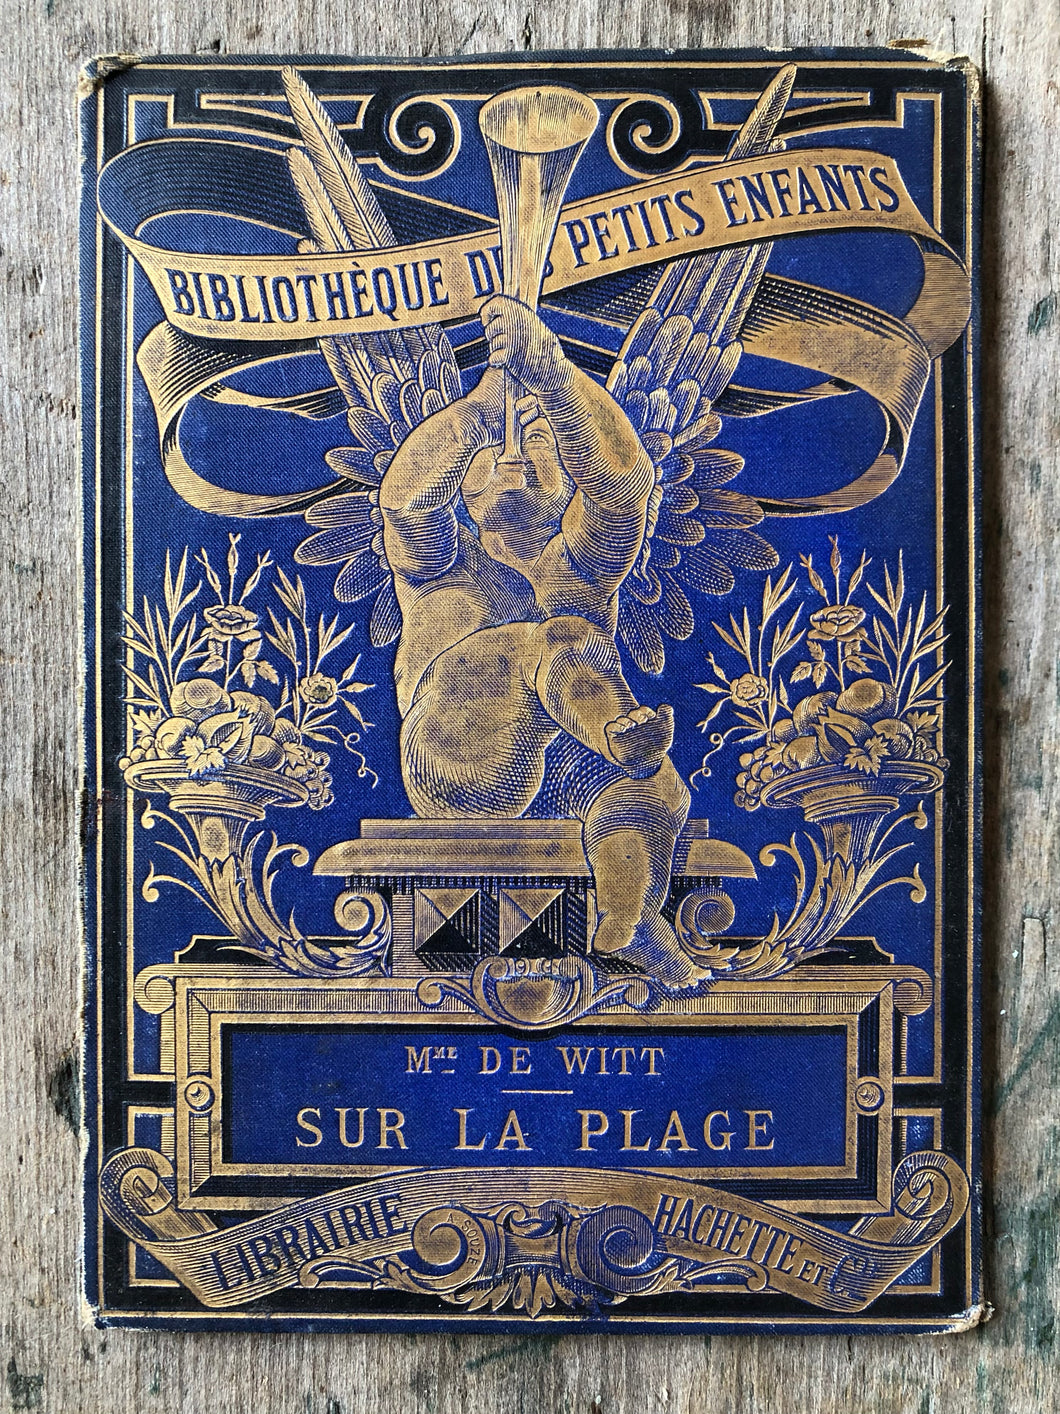 Cover from “Sur la Plage”